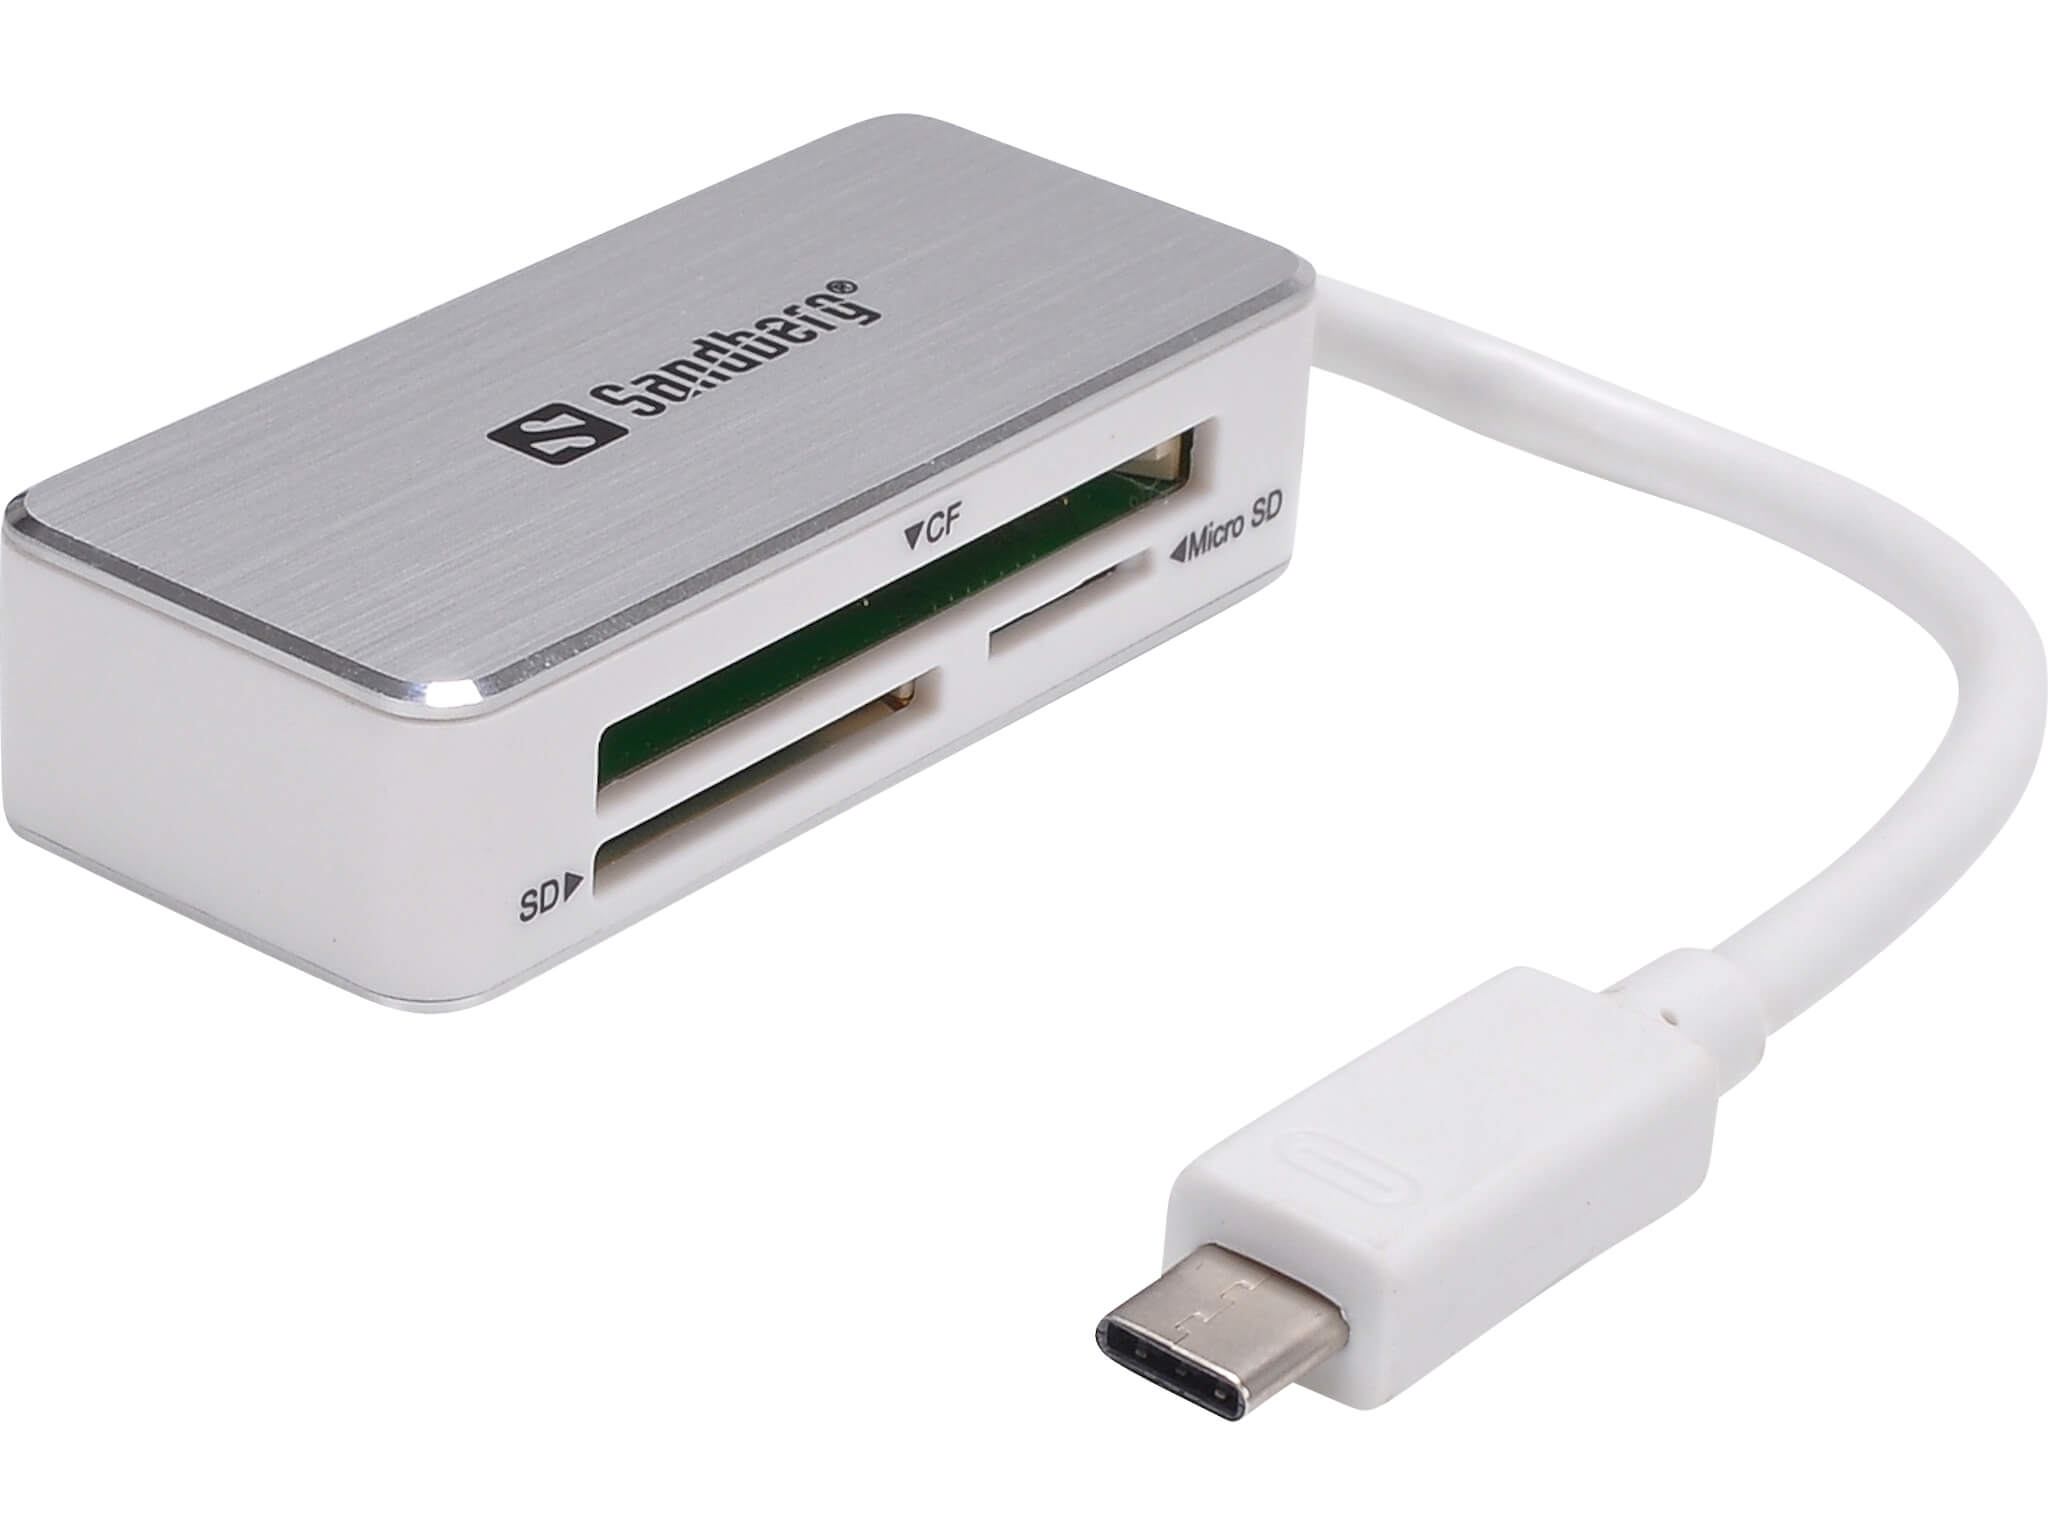 USB-C Multi Memory Card Reader fra Sandberg. Læser SD,SDHC,CF,MMC,T-Flash, MIcro SD kort - lynhurtigt og med 5 års garanti.